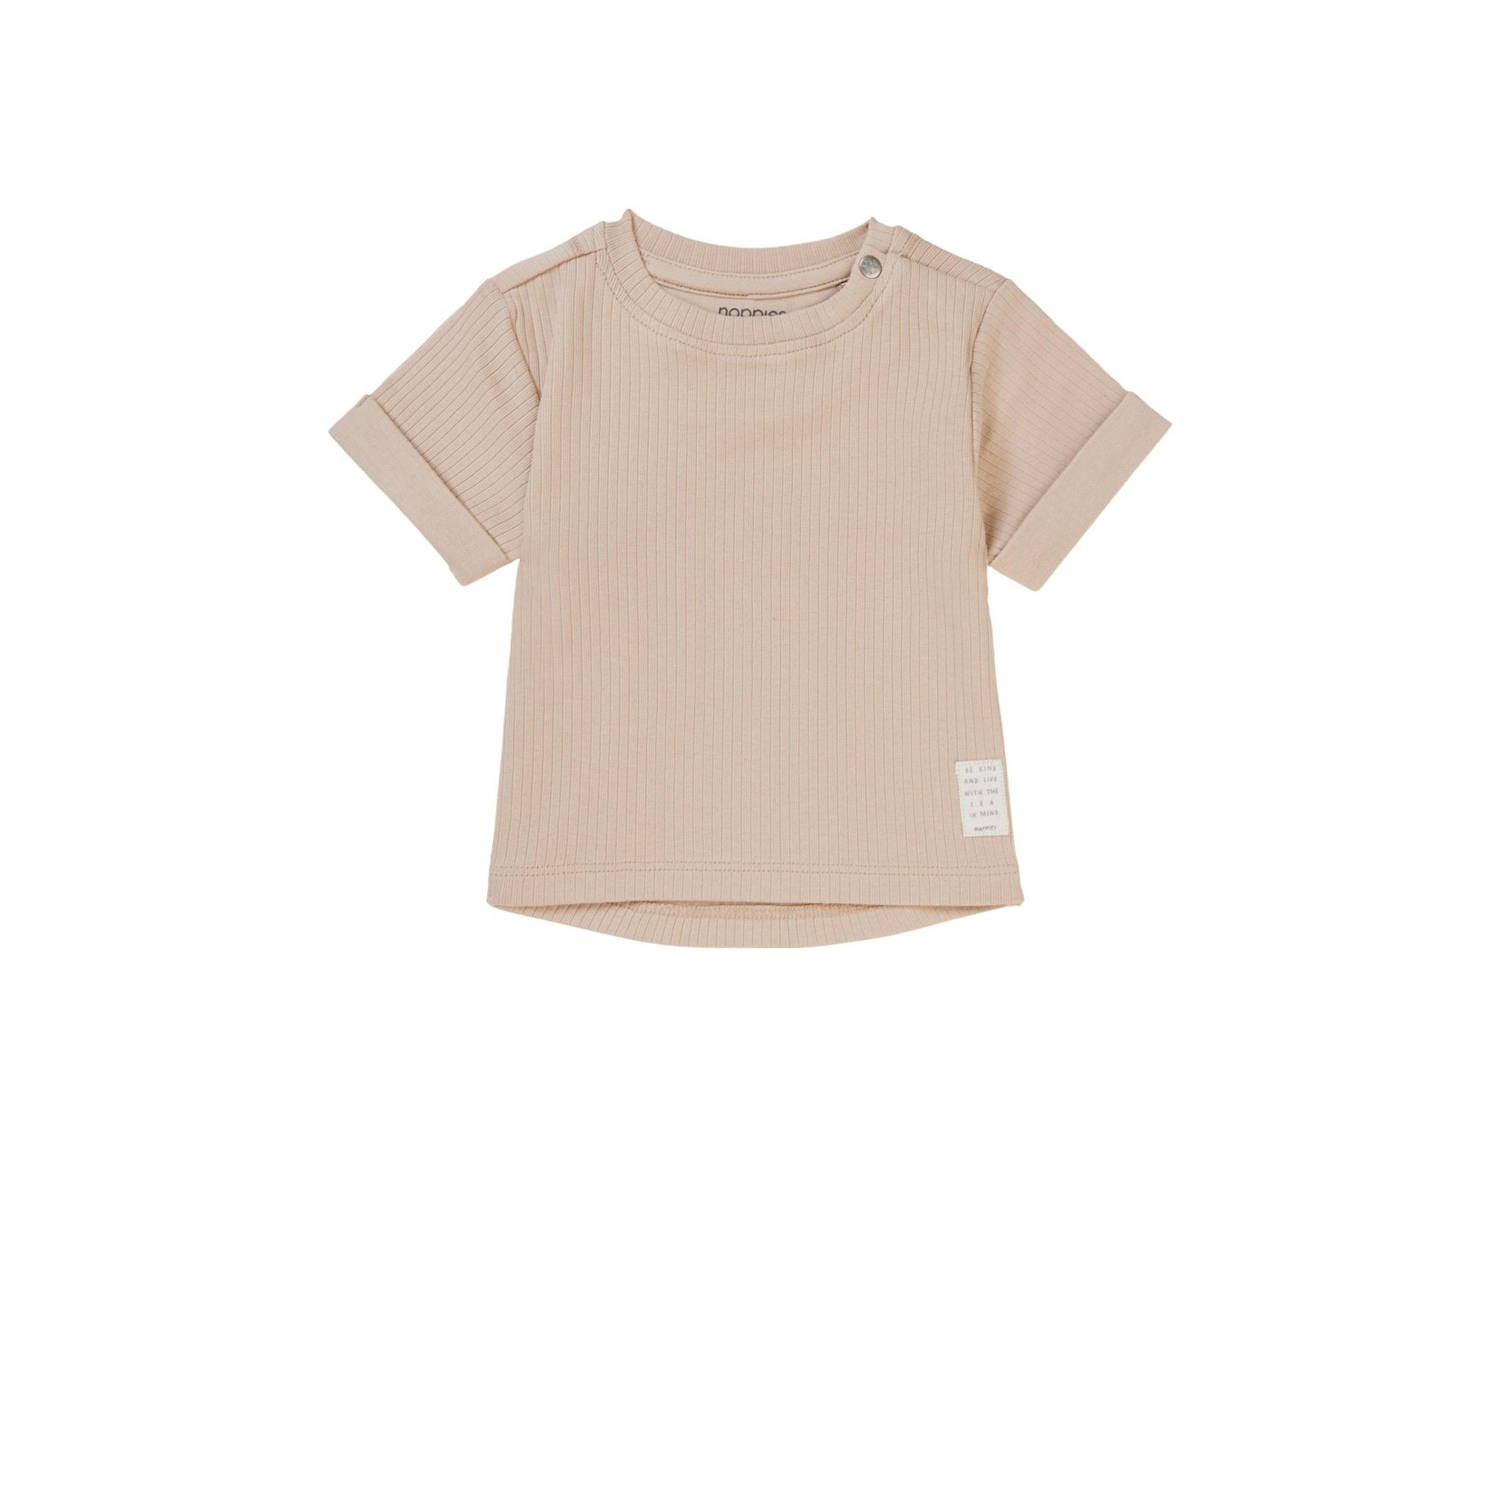 Noppies baby T-shirt beige